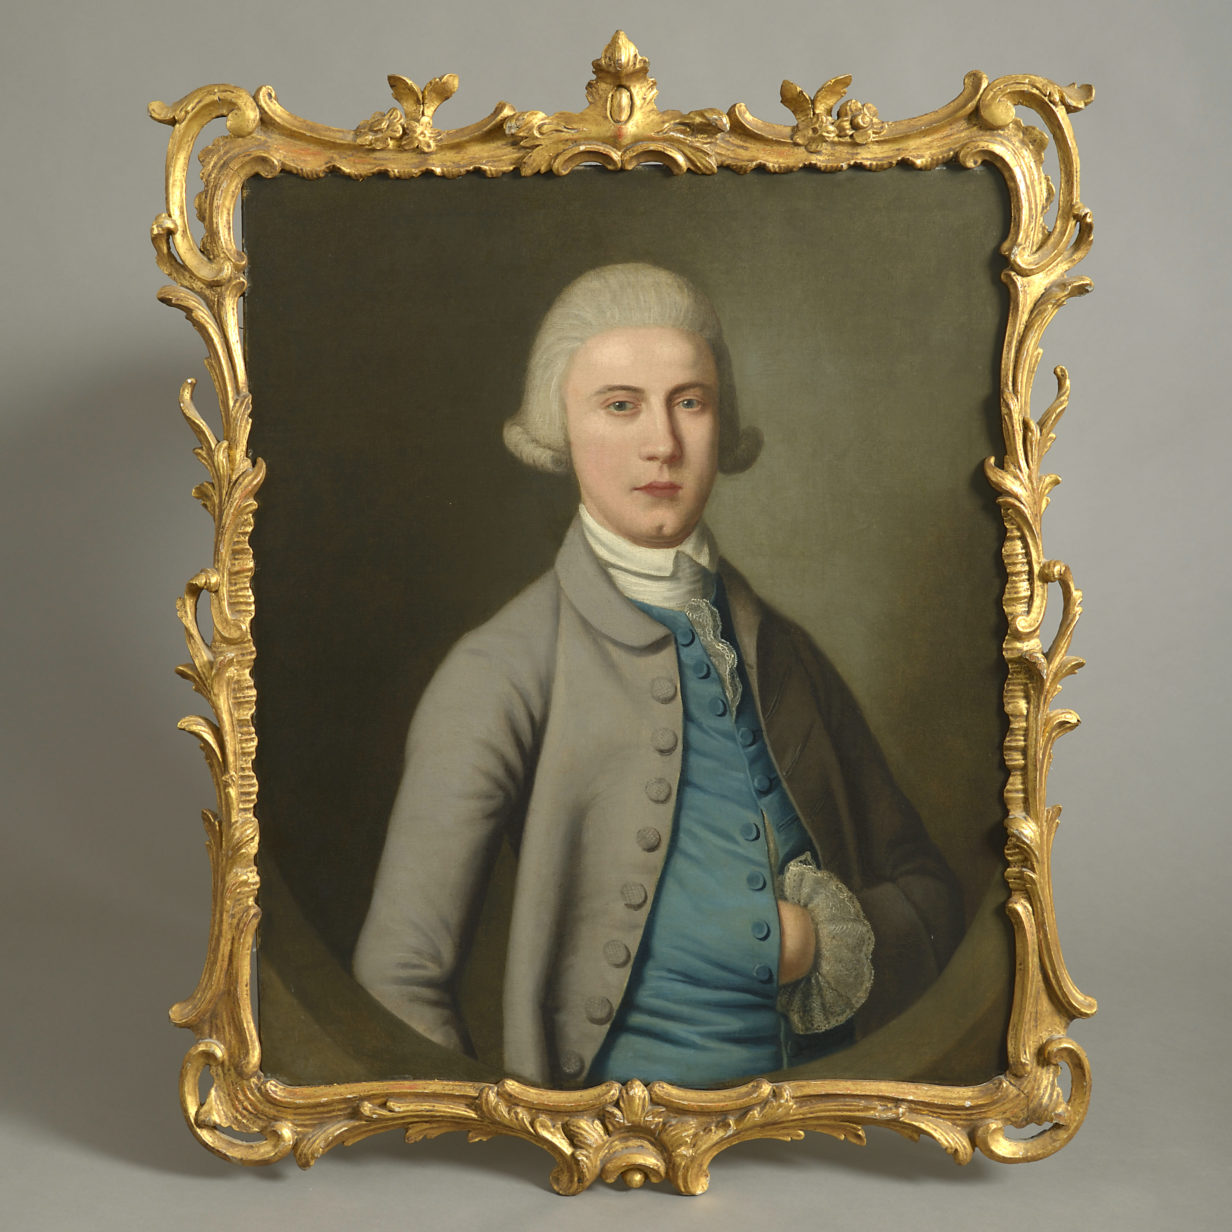 Three 18th century portraits - circle of john singleton copley